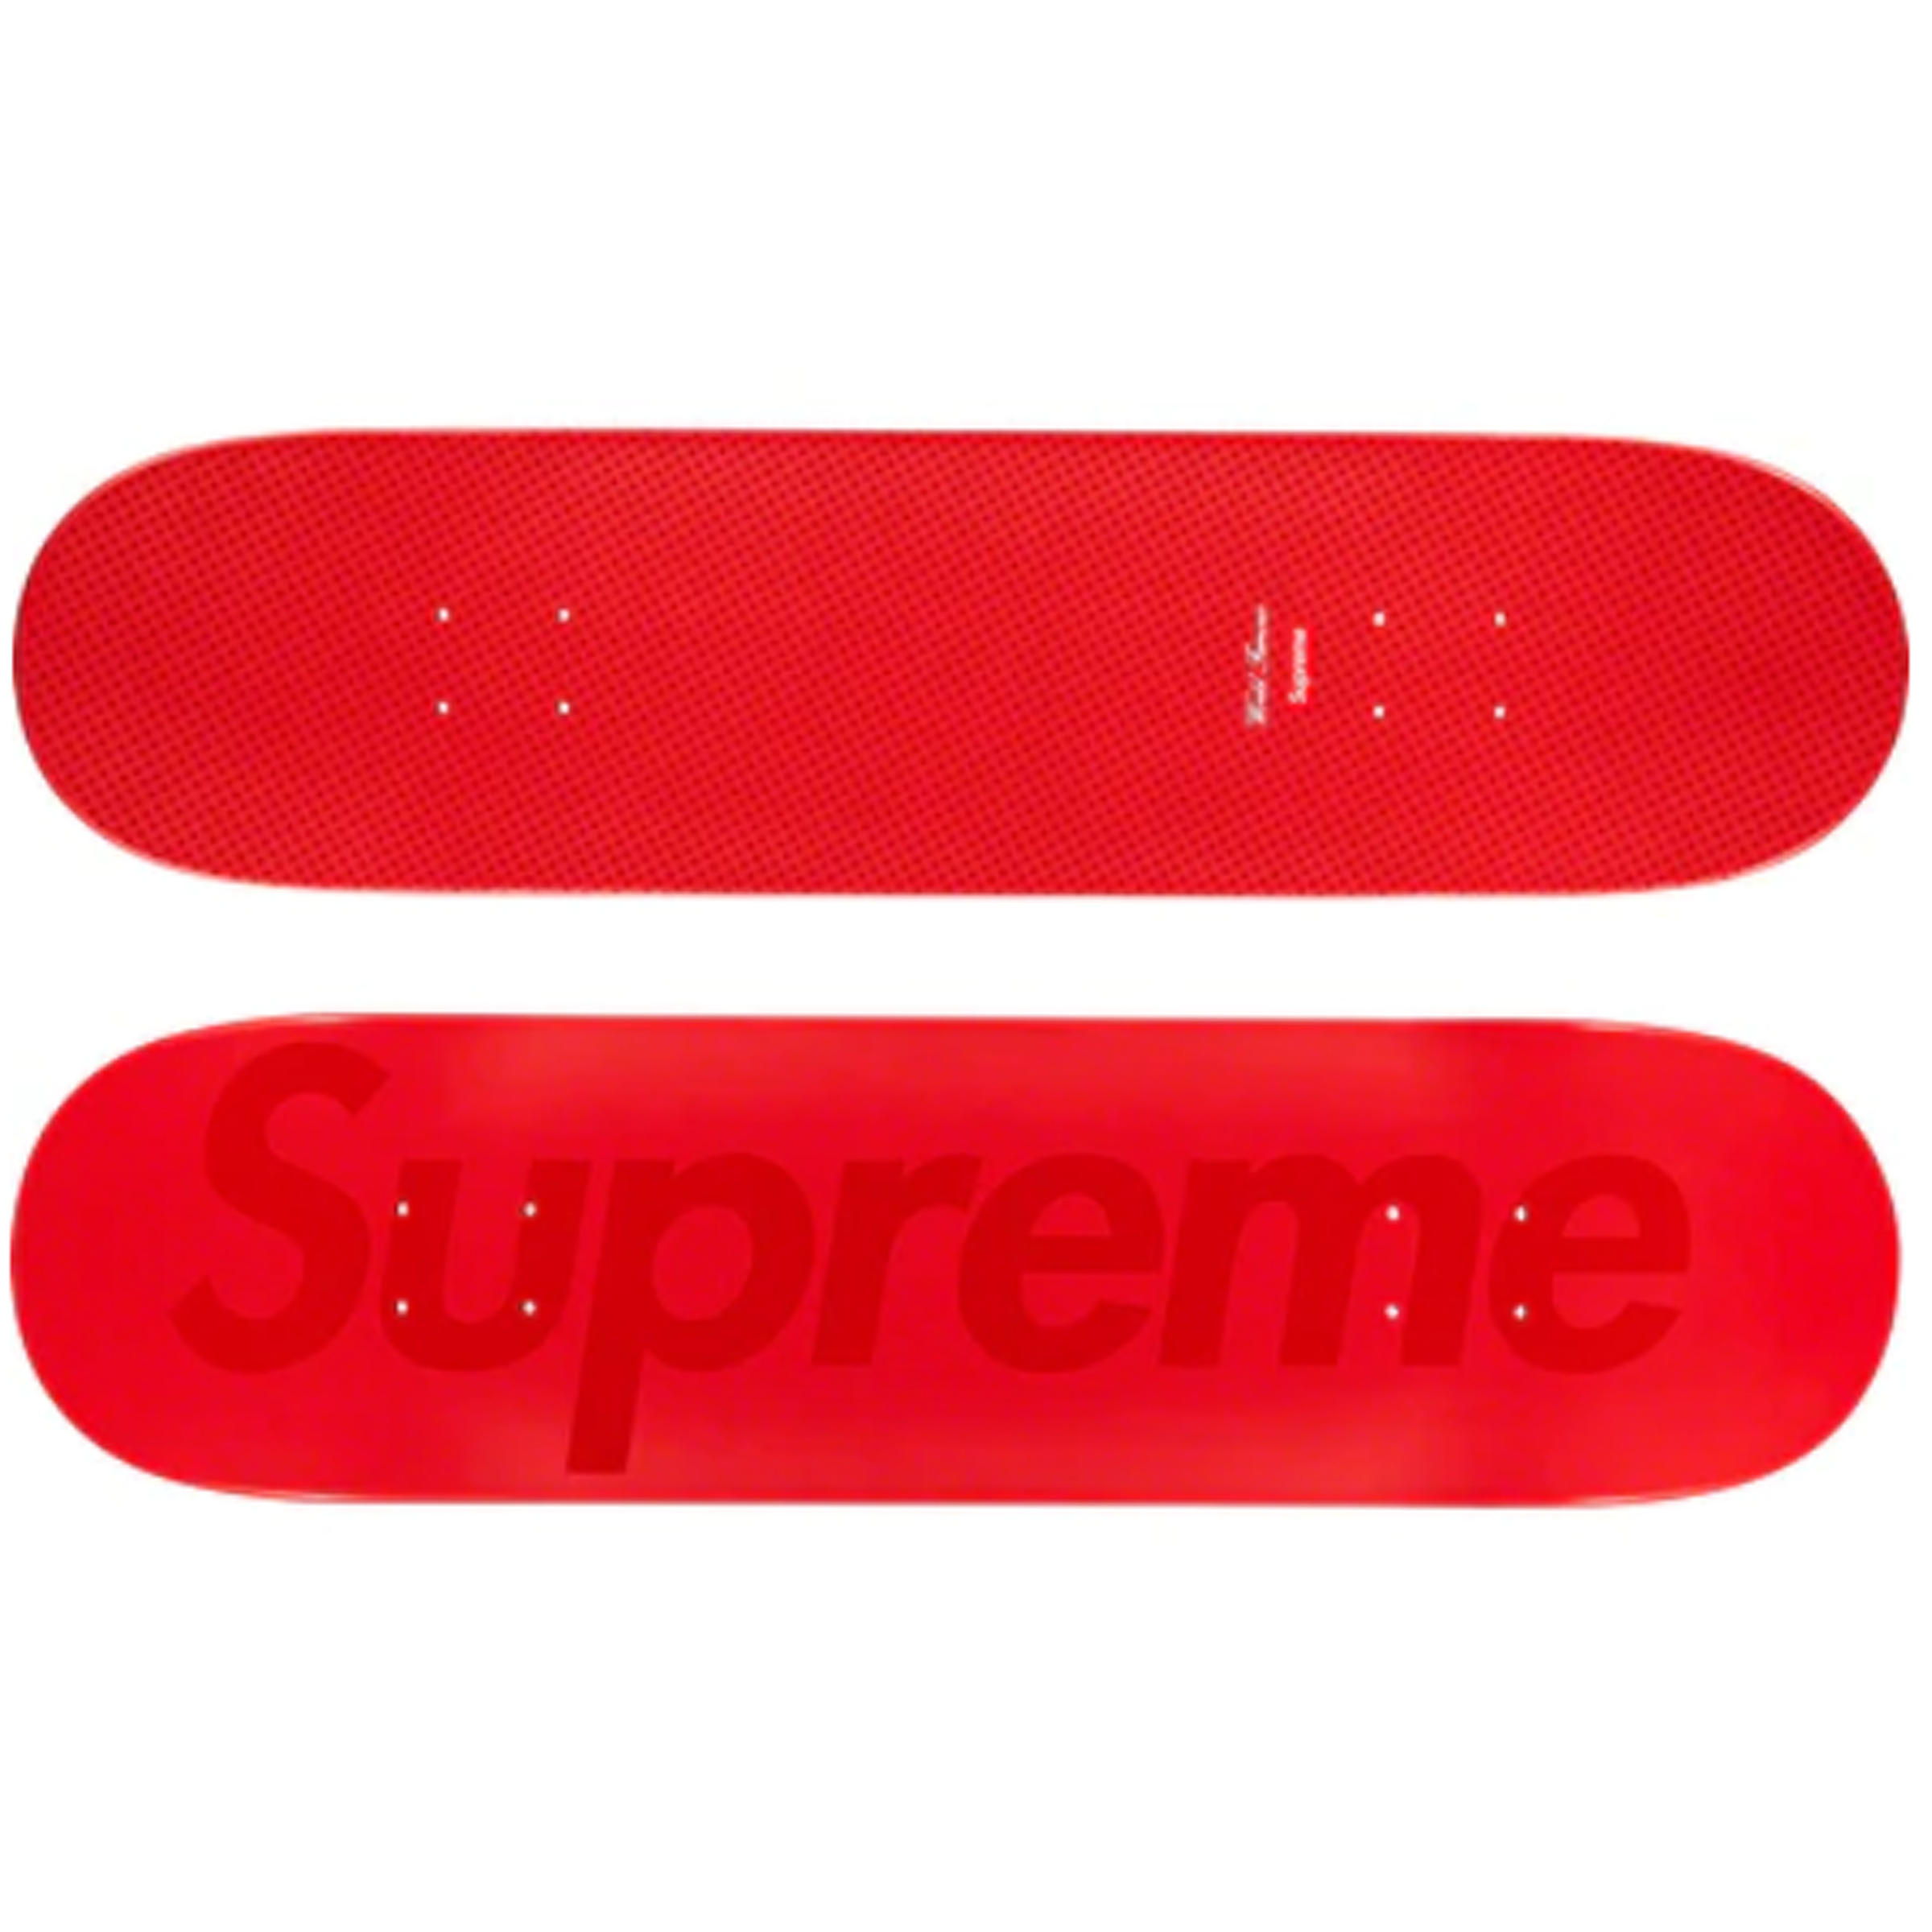 Supreme "Tonal" Skateboard